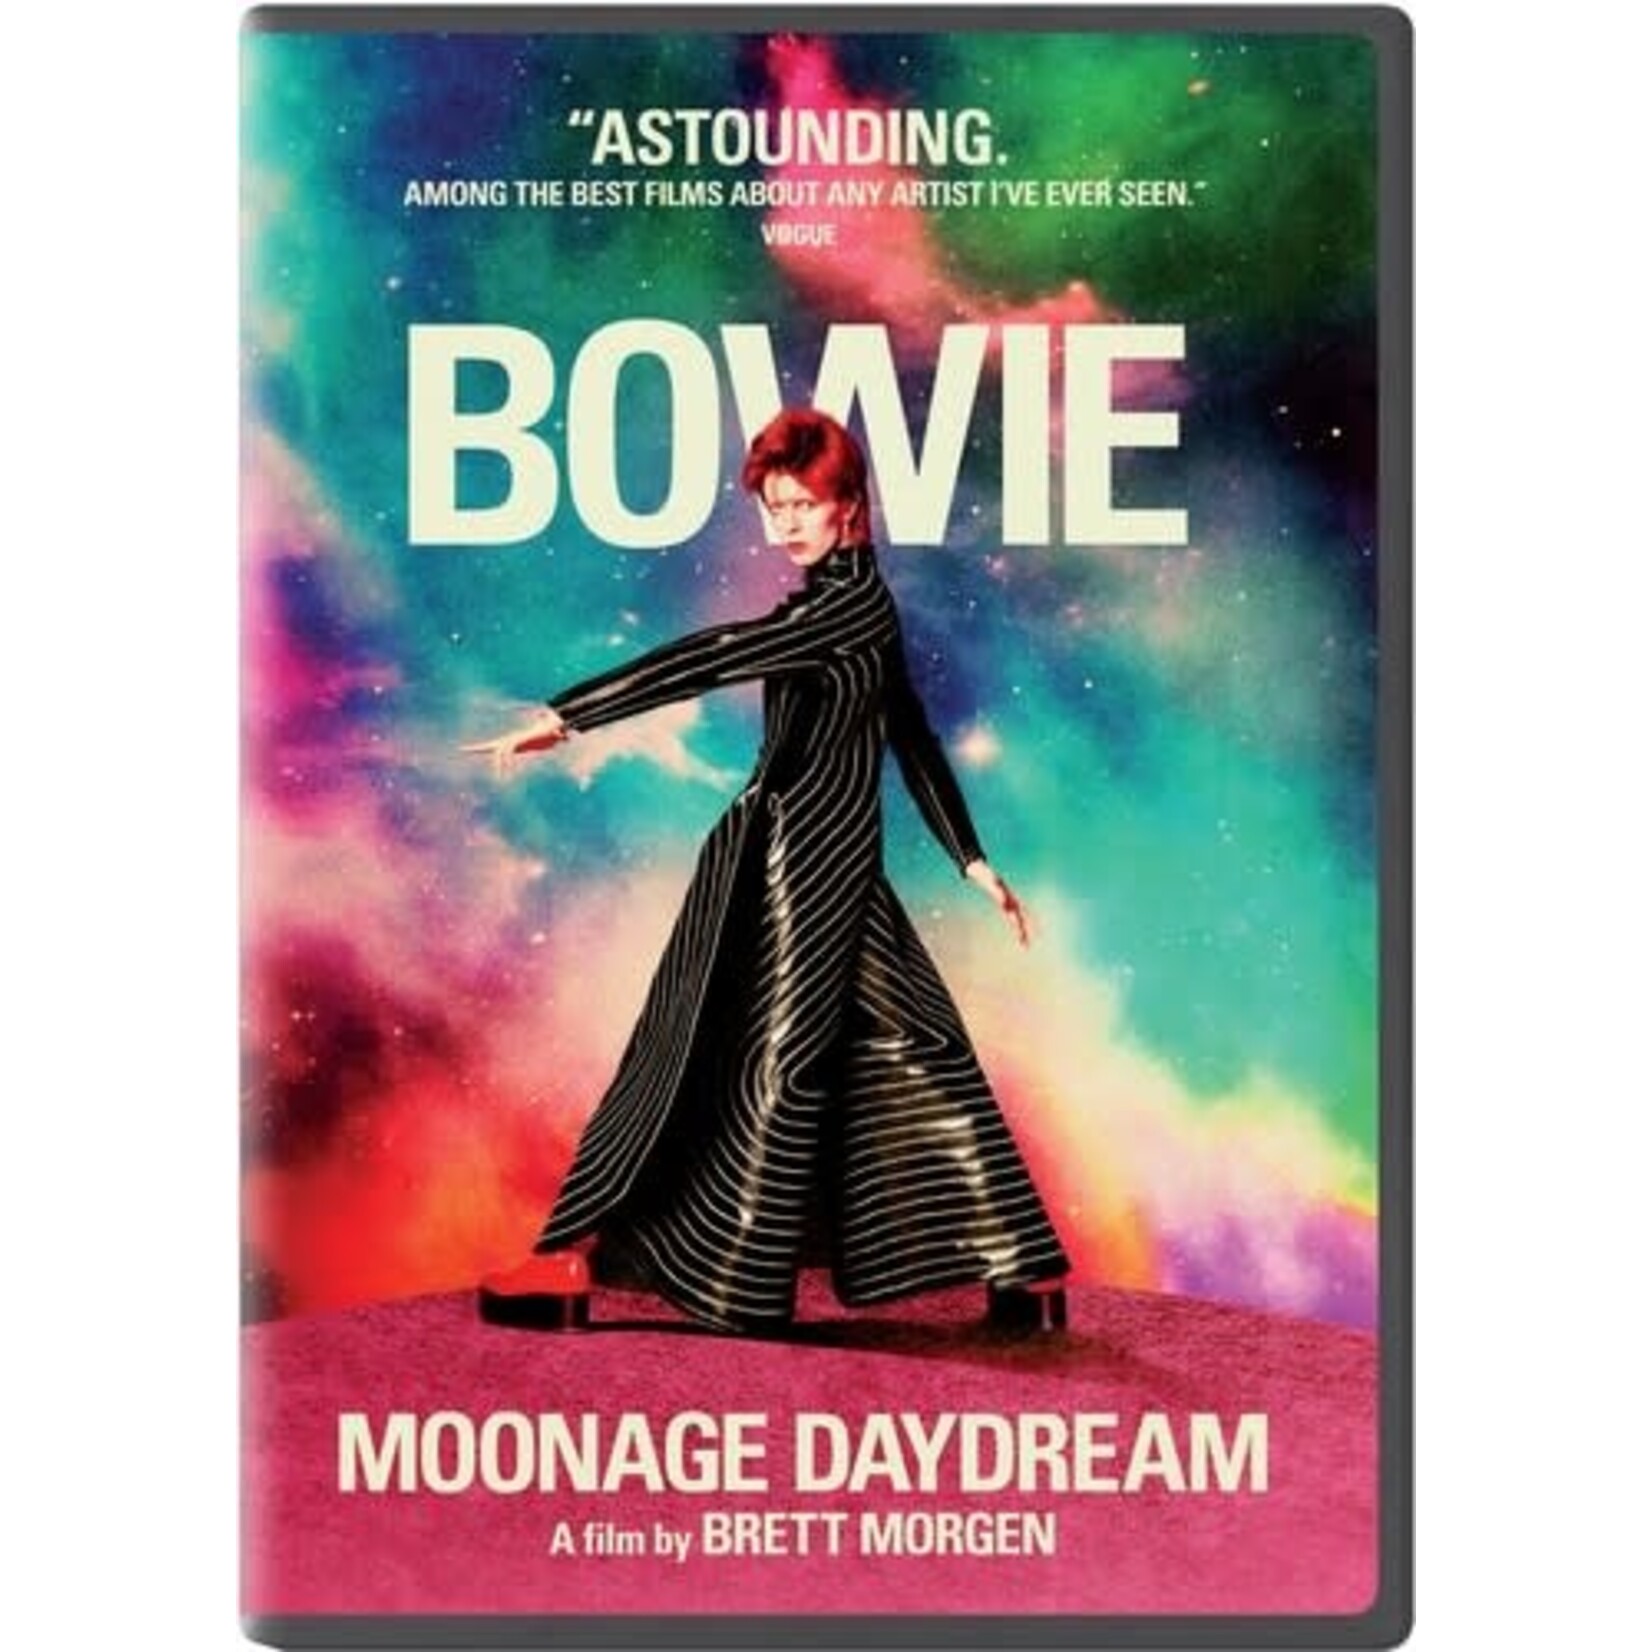 David Bowie - Moonage Daydream - DVD (NEW)